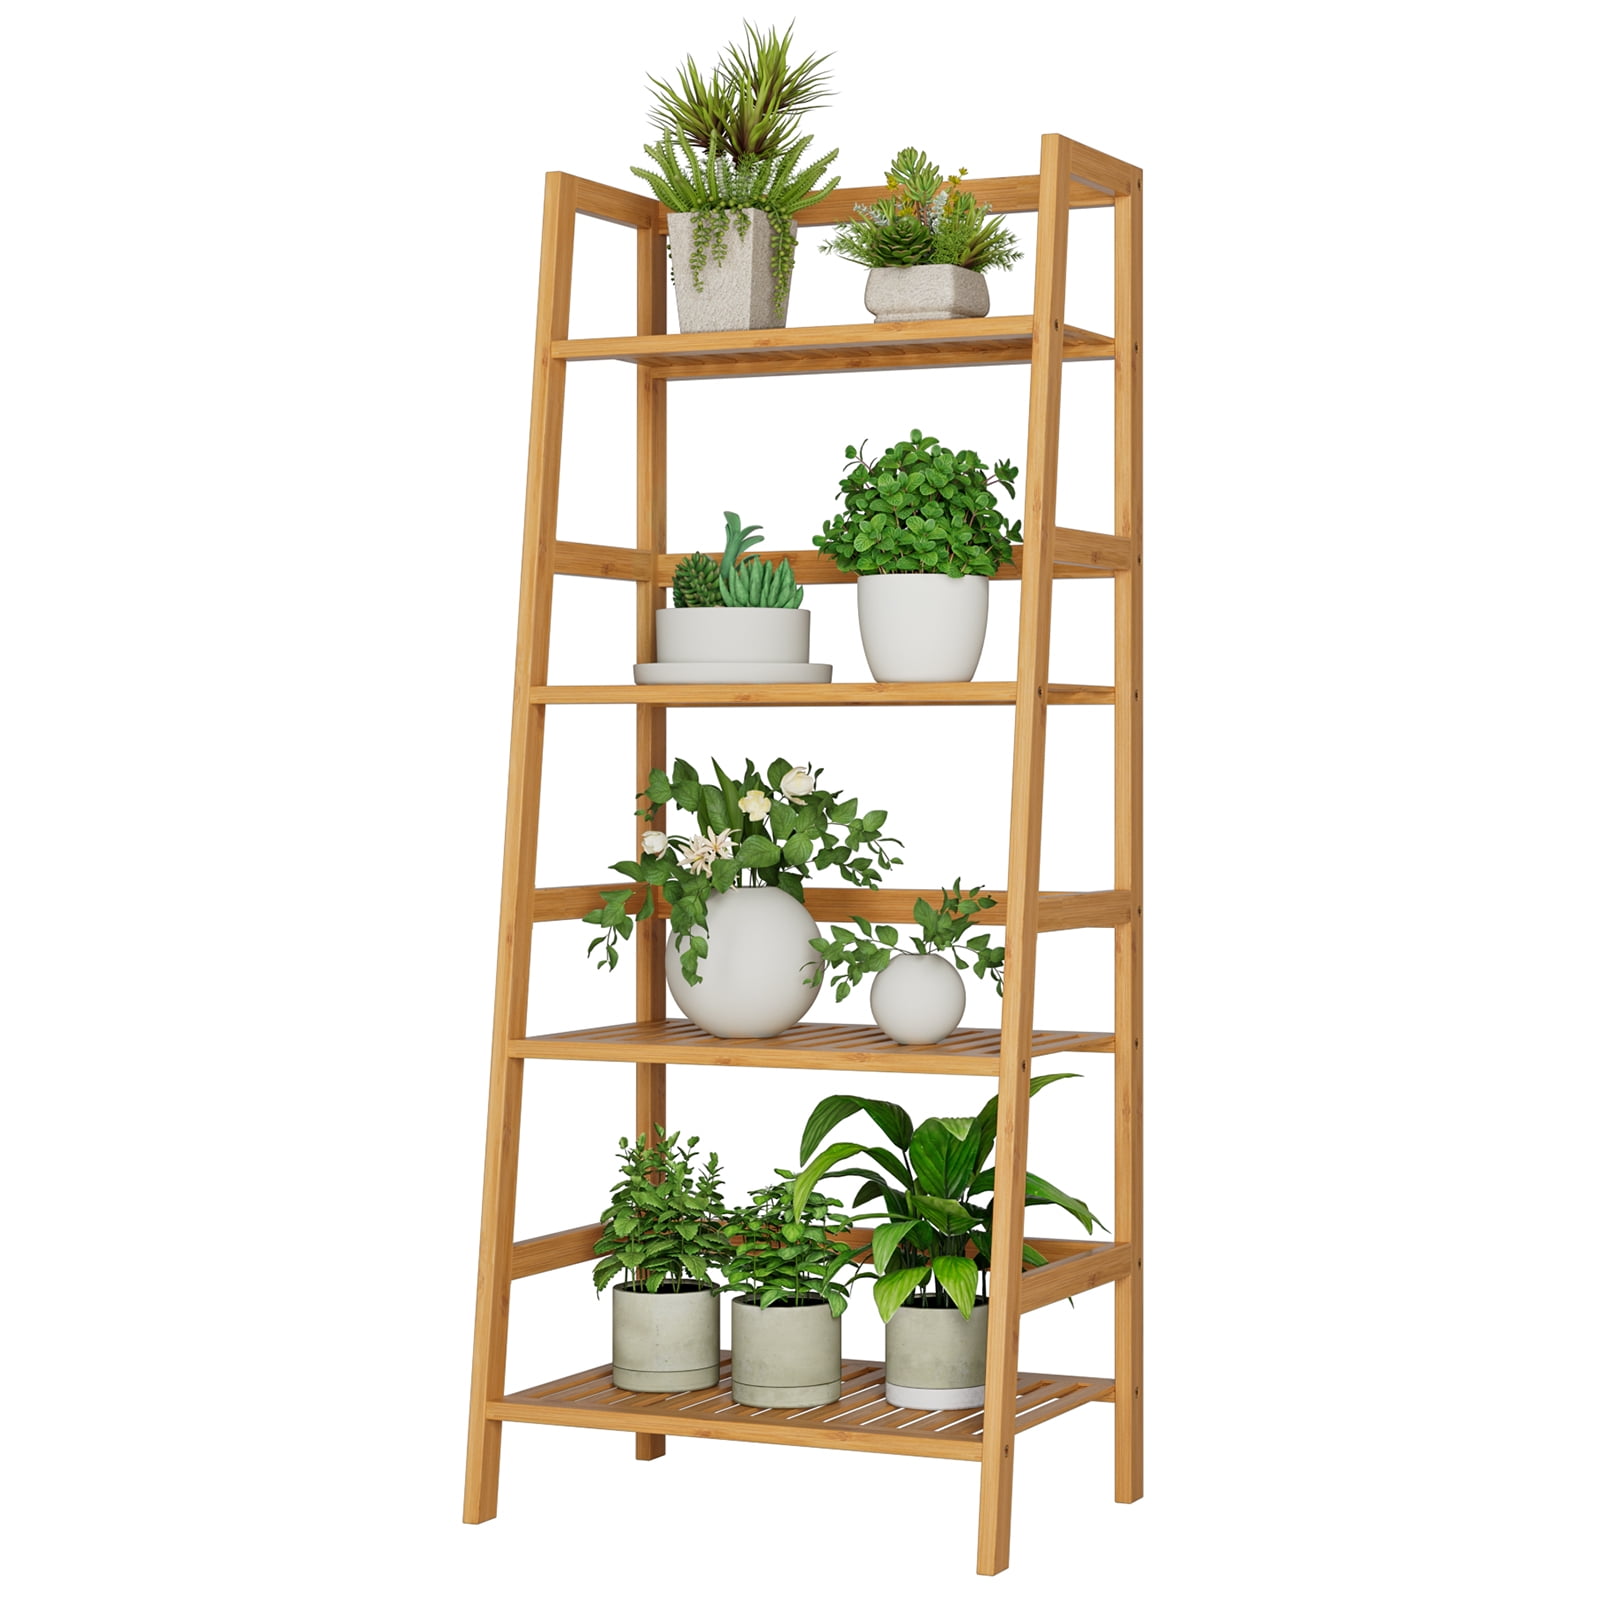 Homfa 4 Tier Ladder Shelf Unit Bamboo Storage Shelves Bookcase Stand Shelves Plant Stand 48x32x116cm White 